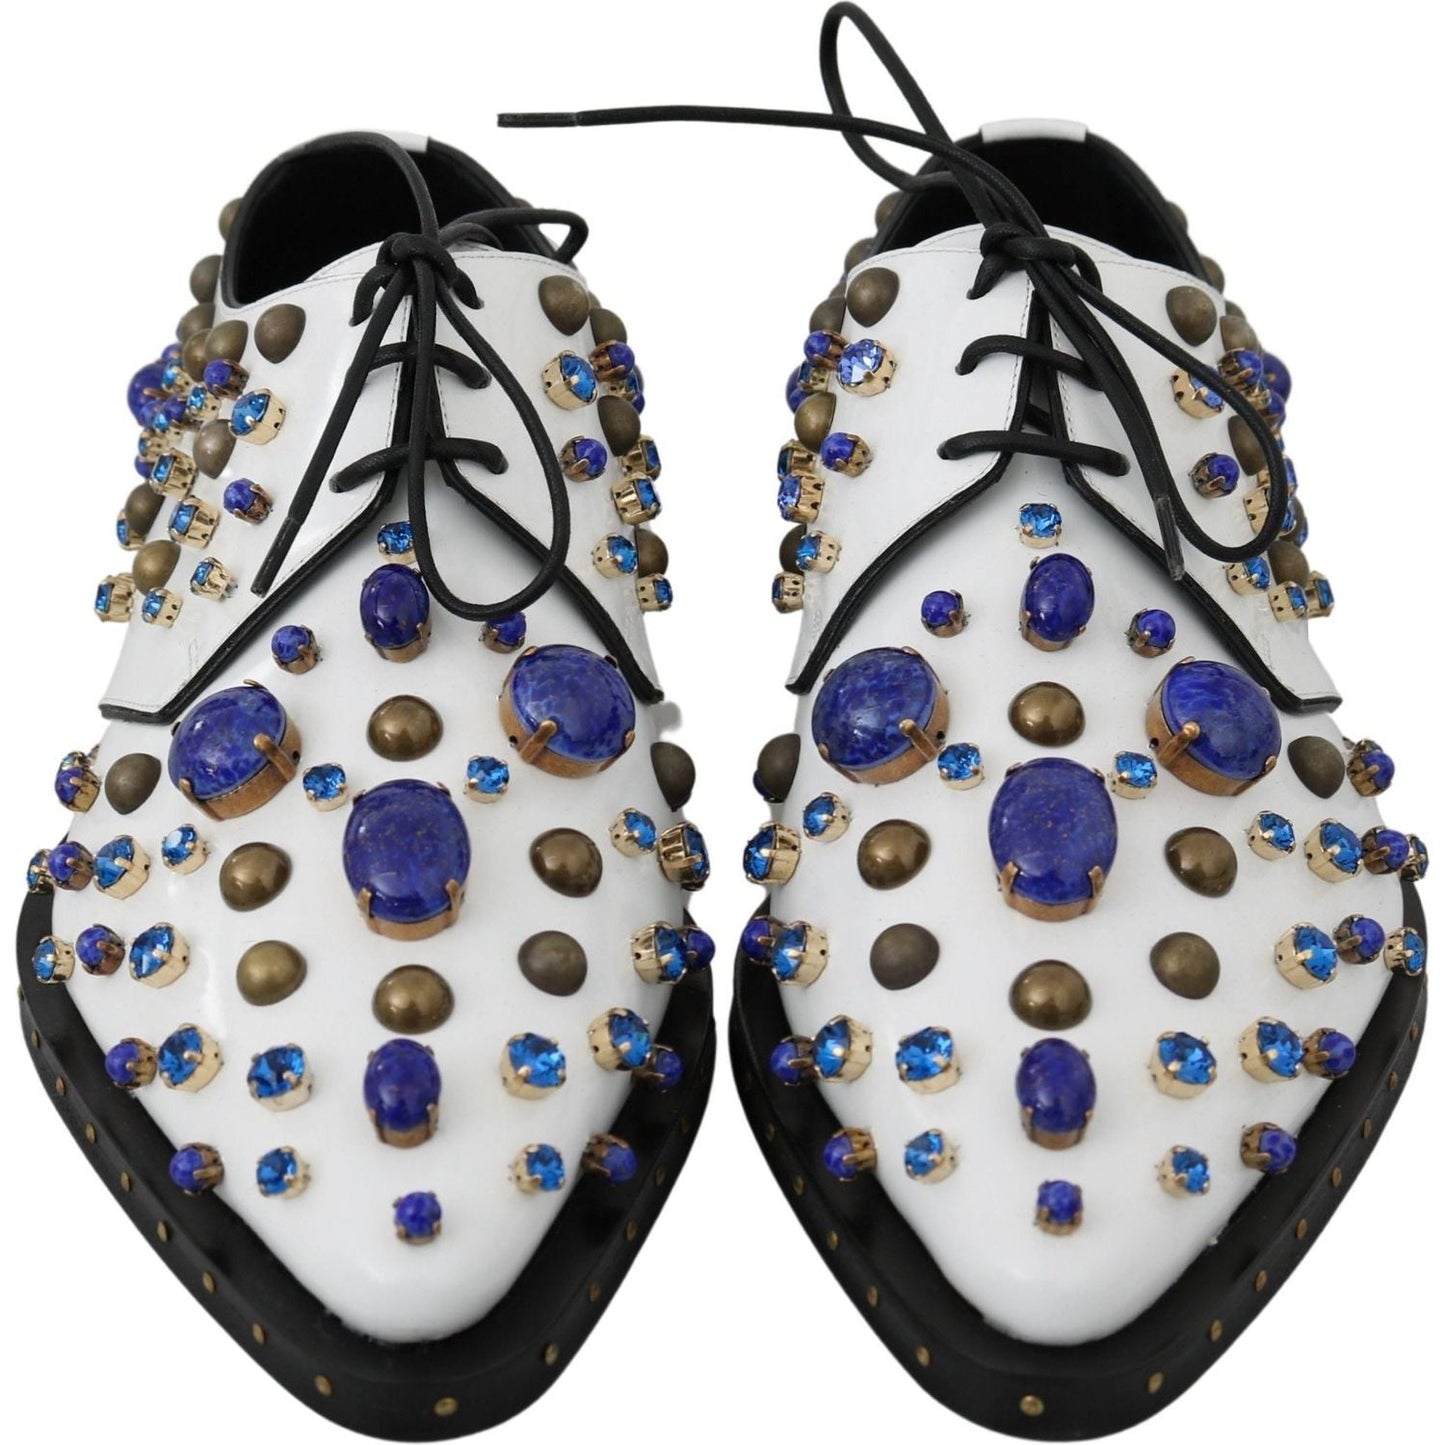 Dolce & Gabbana Elegant White Leather Dress Shoes With Crystals white-leather-crystals-dress-broque-shoes